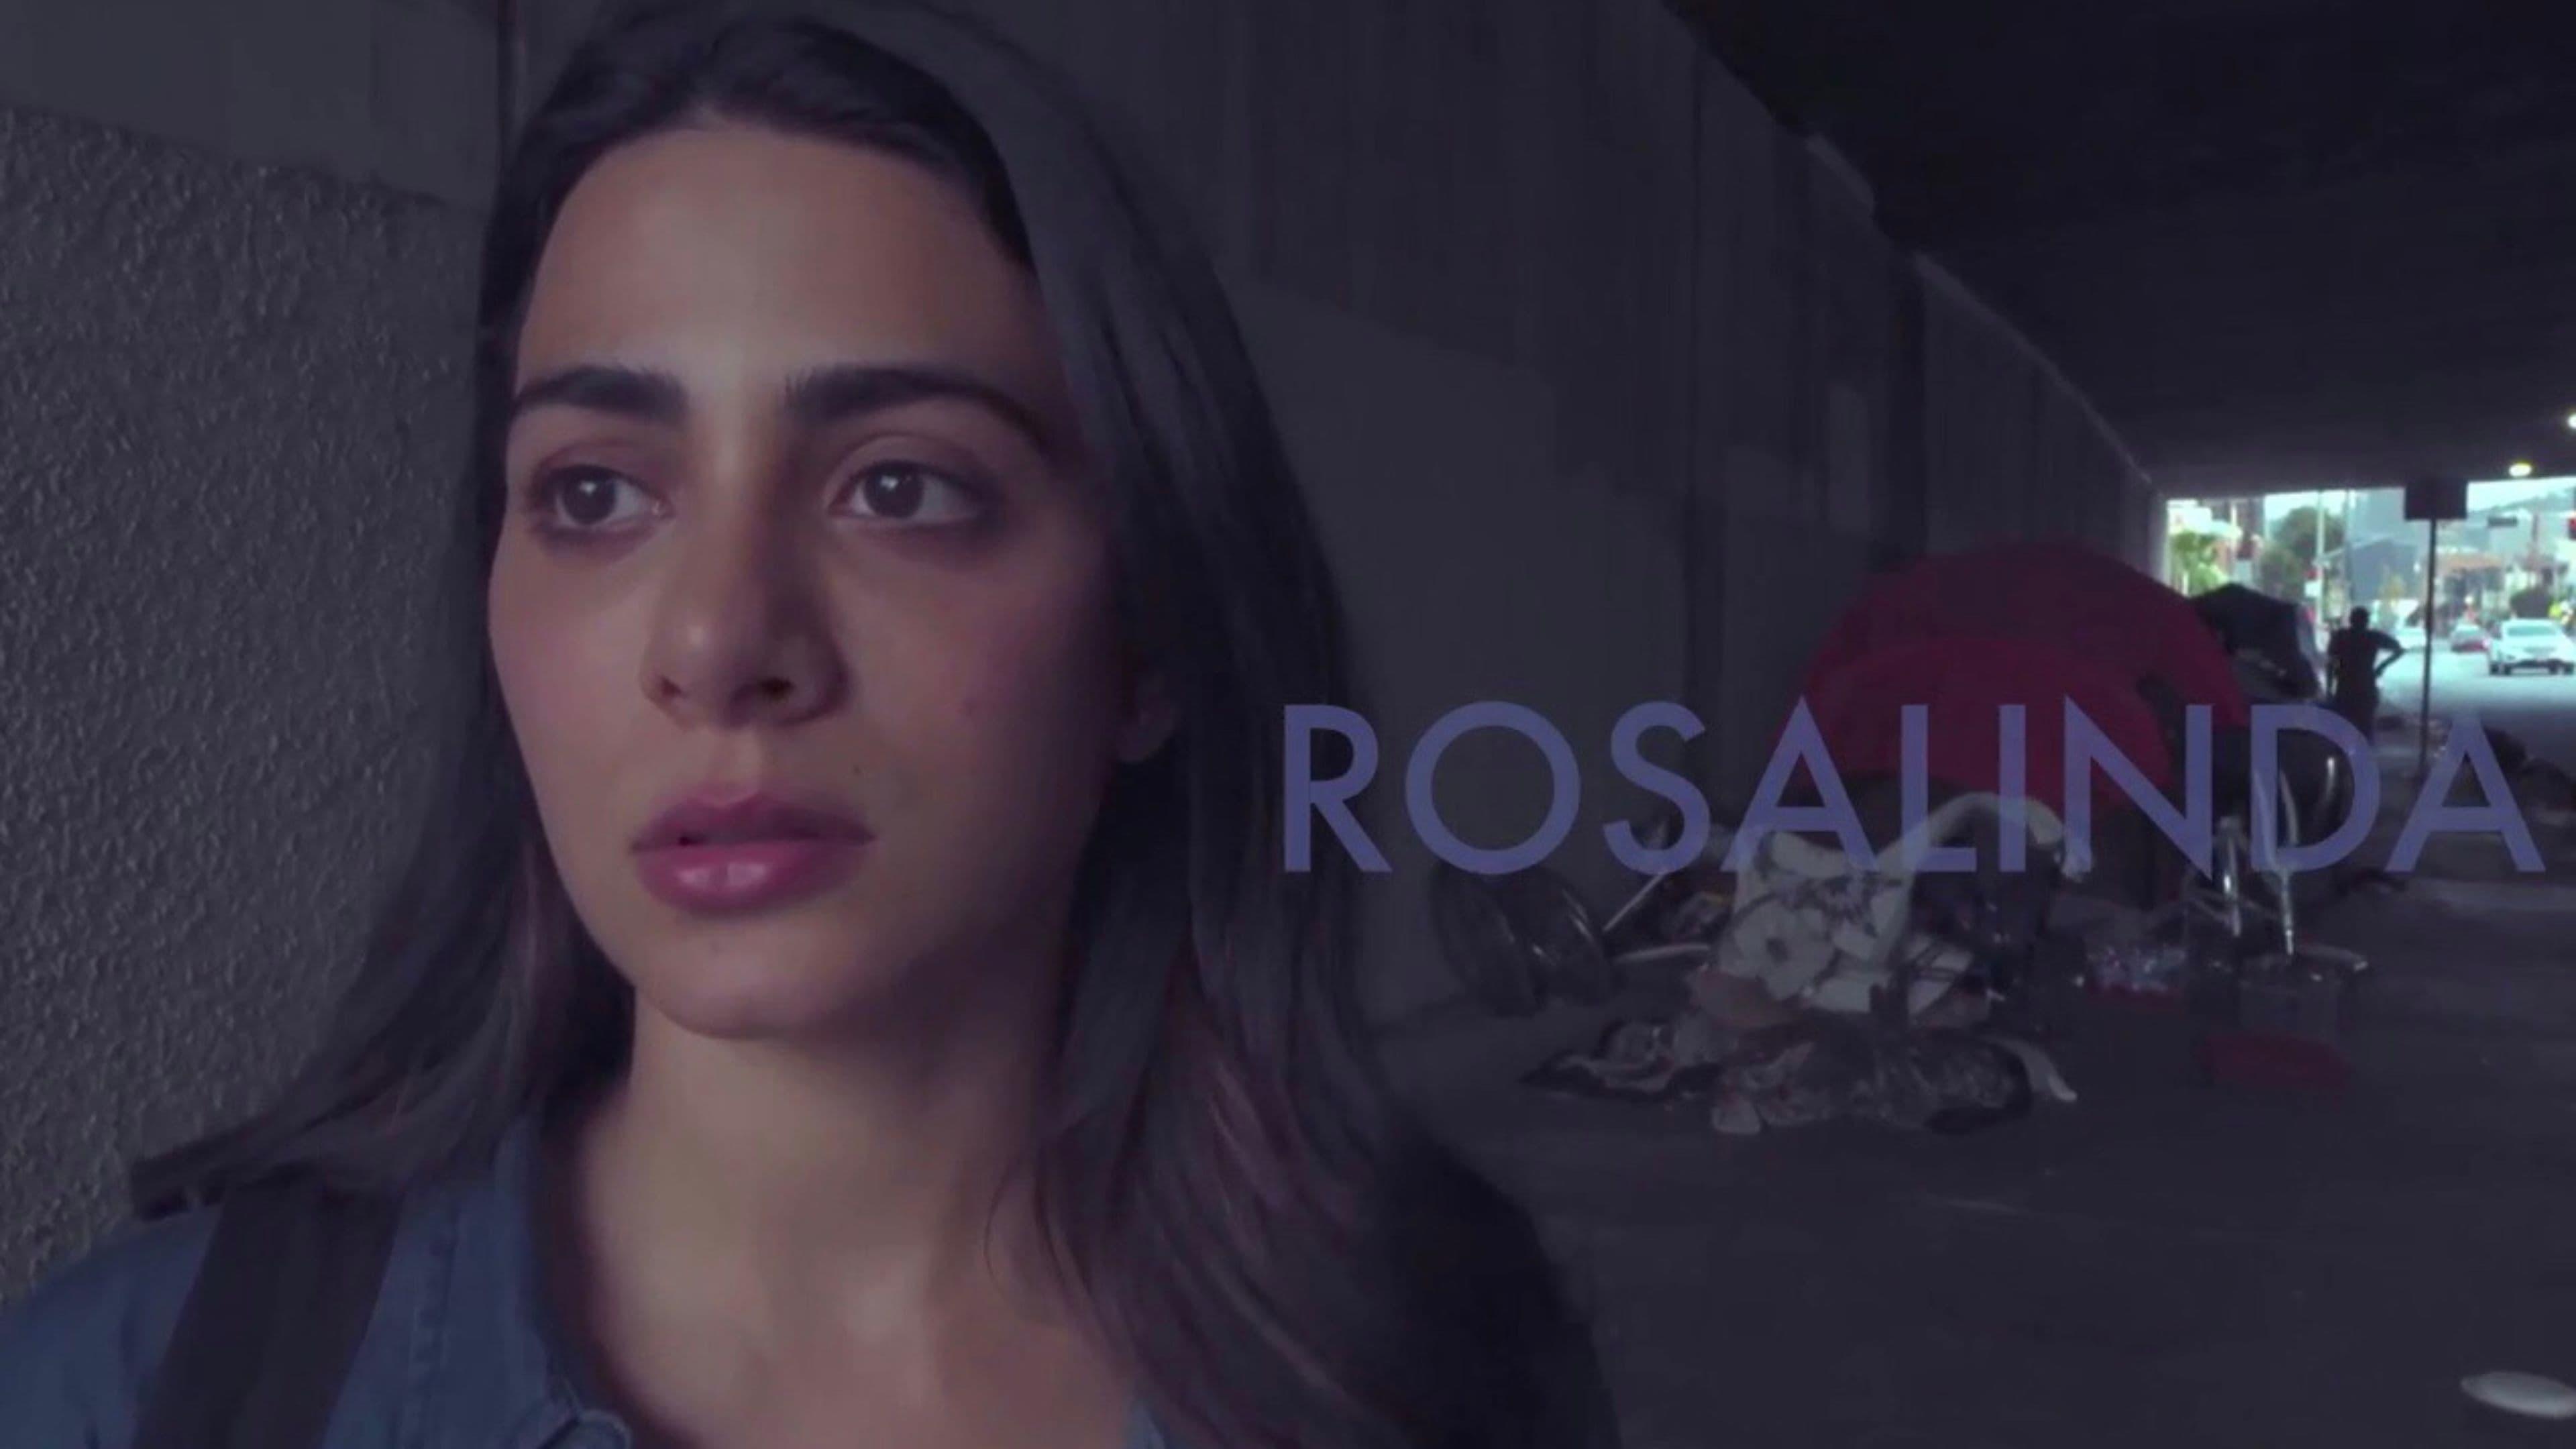 Rosalinda 2020 backdrop